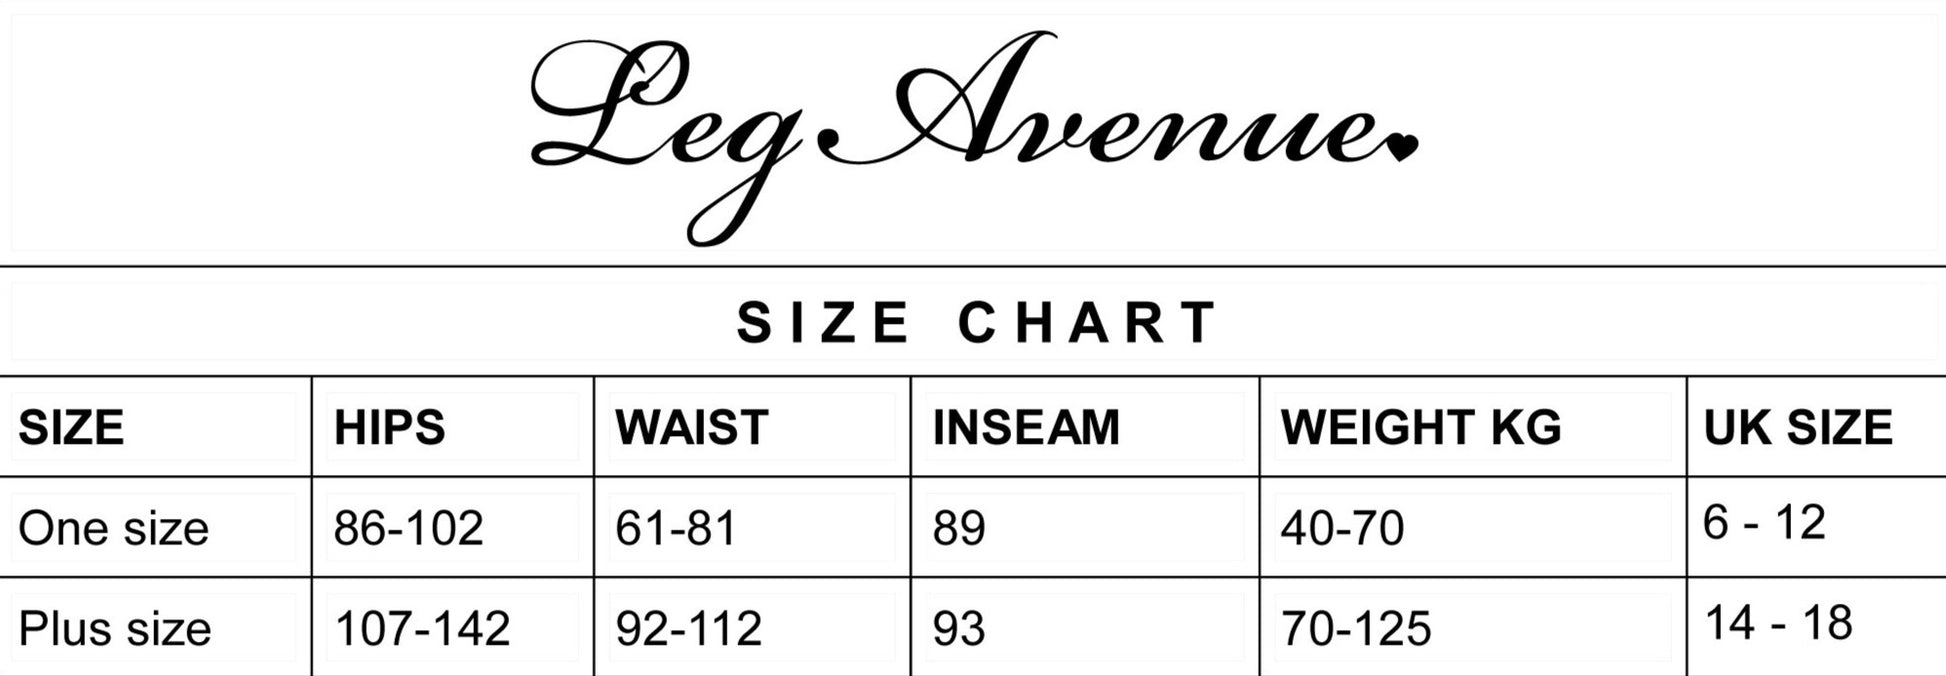 Leg Avenue - Size Chart